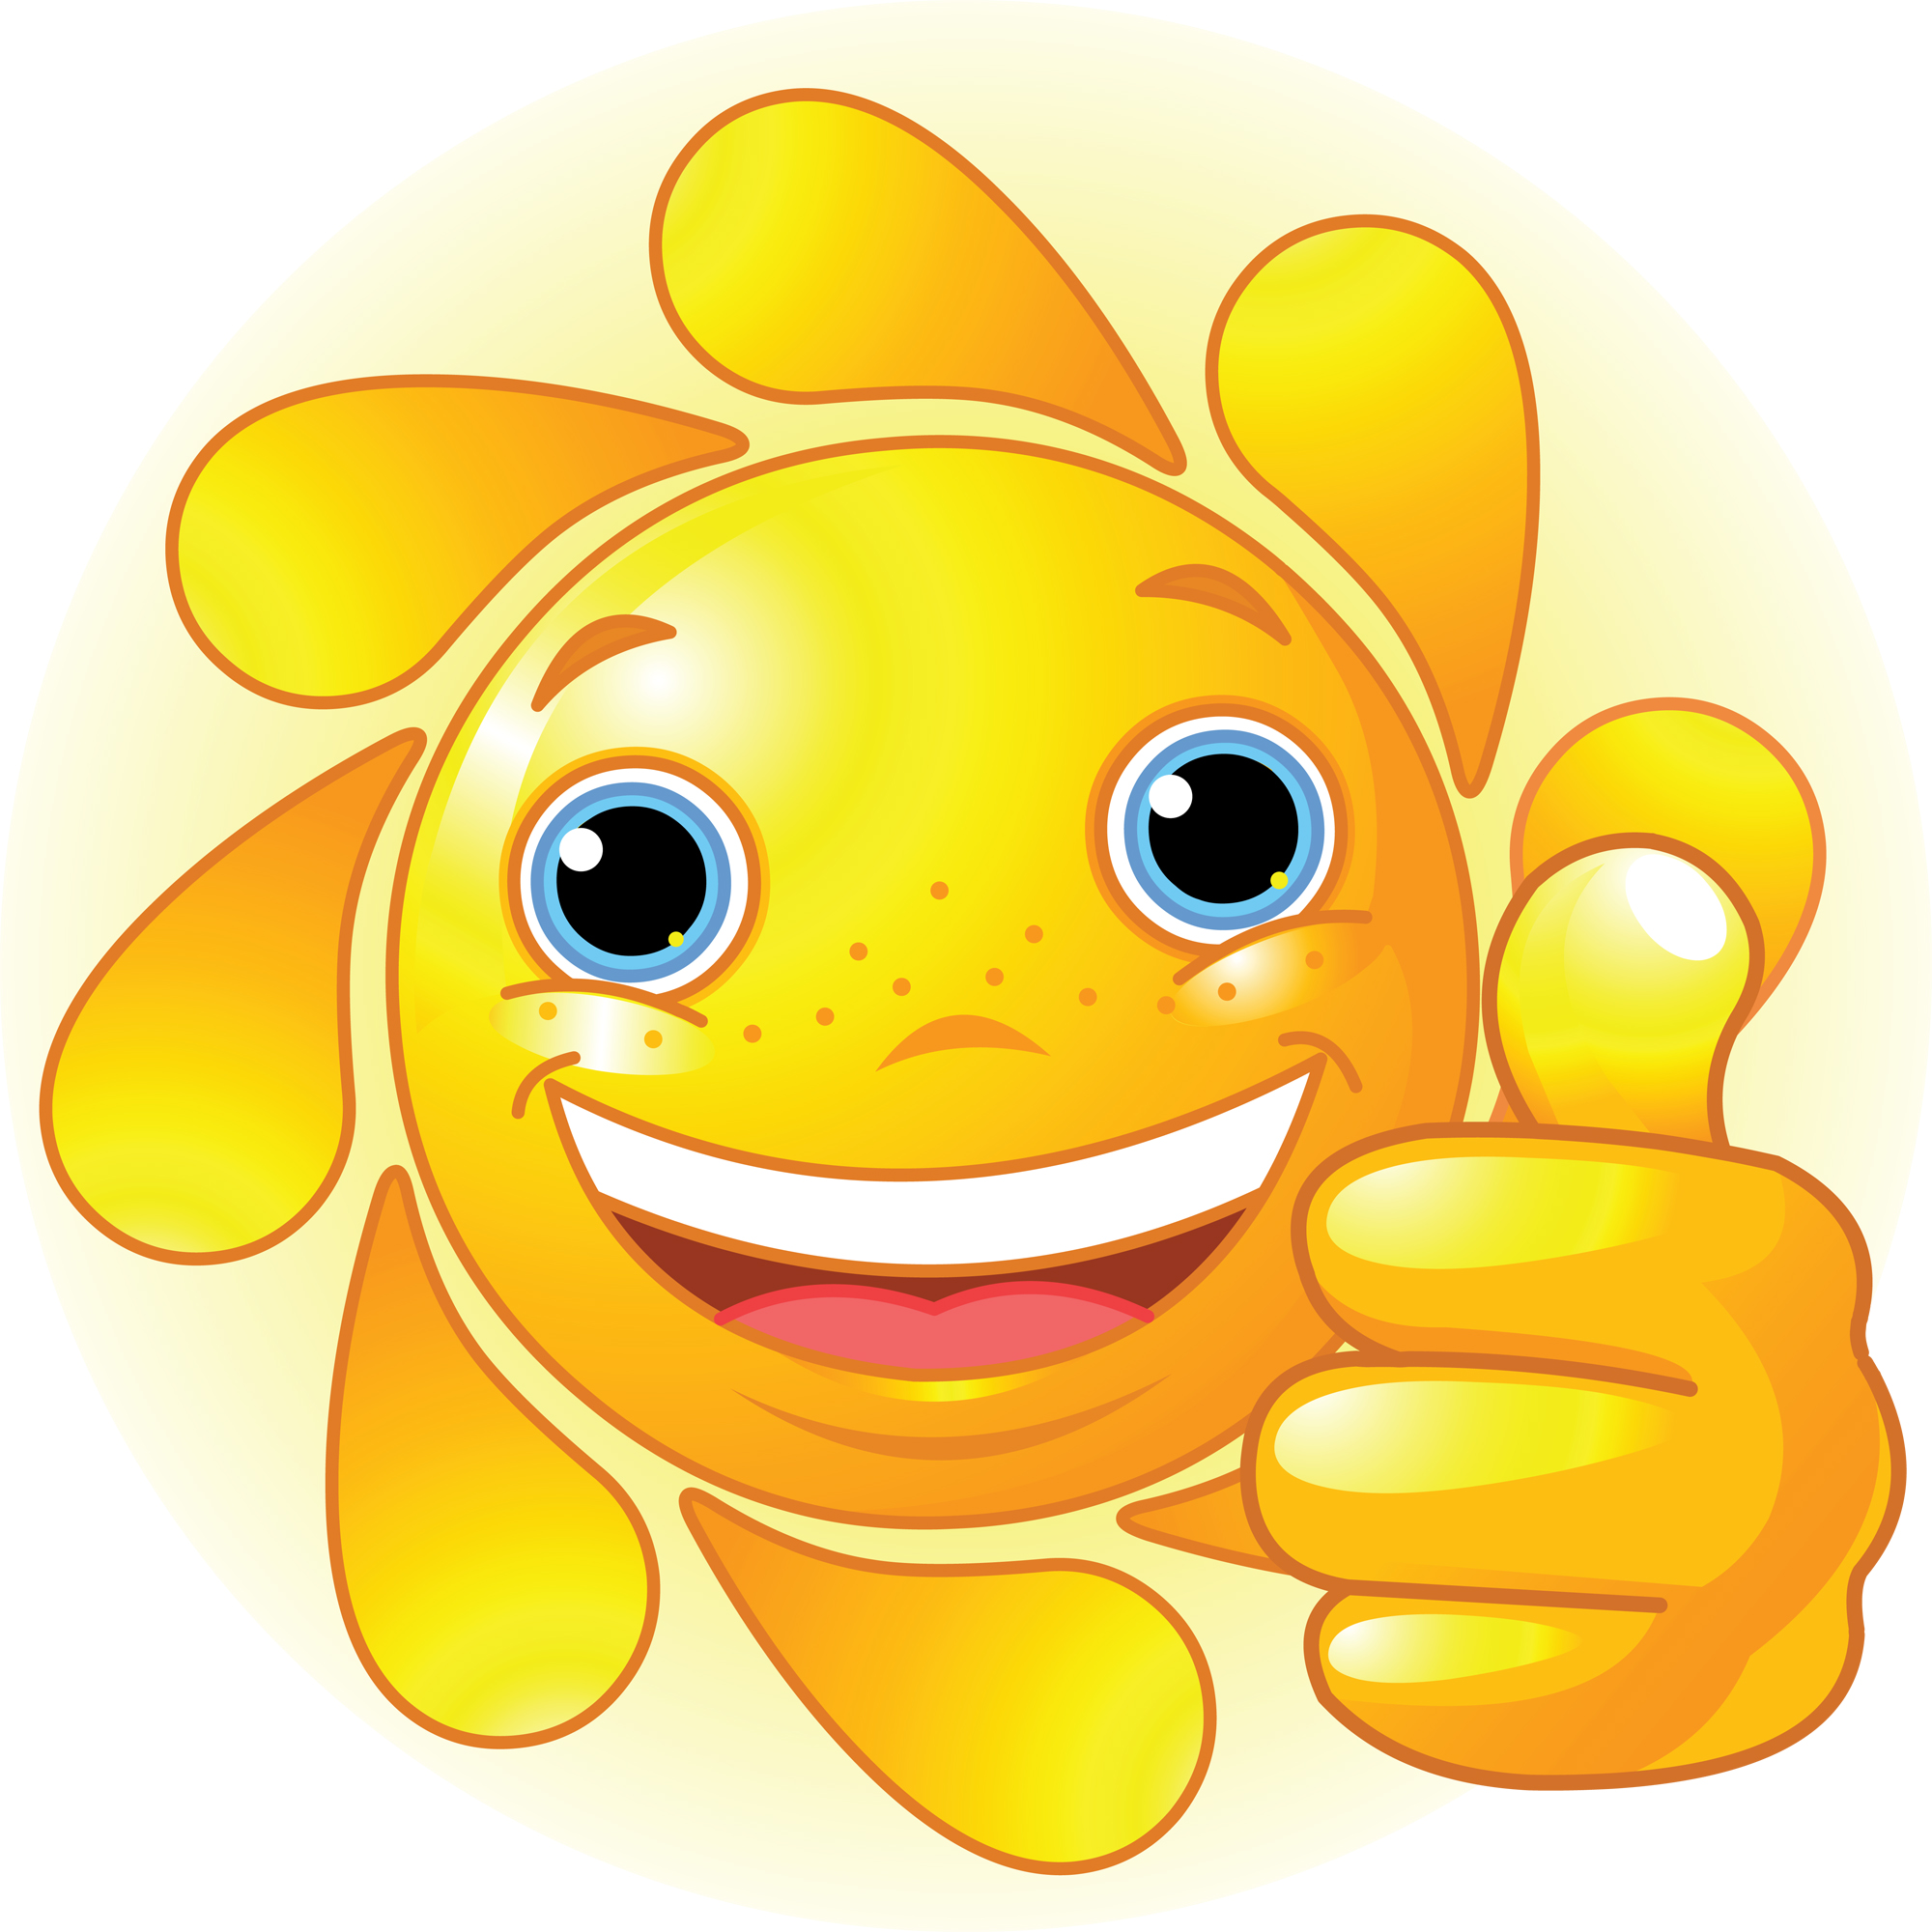 Smiling Sun Clip Art - Clipart library